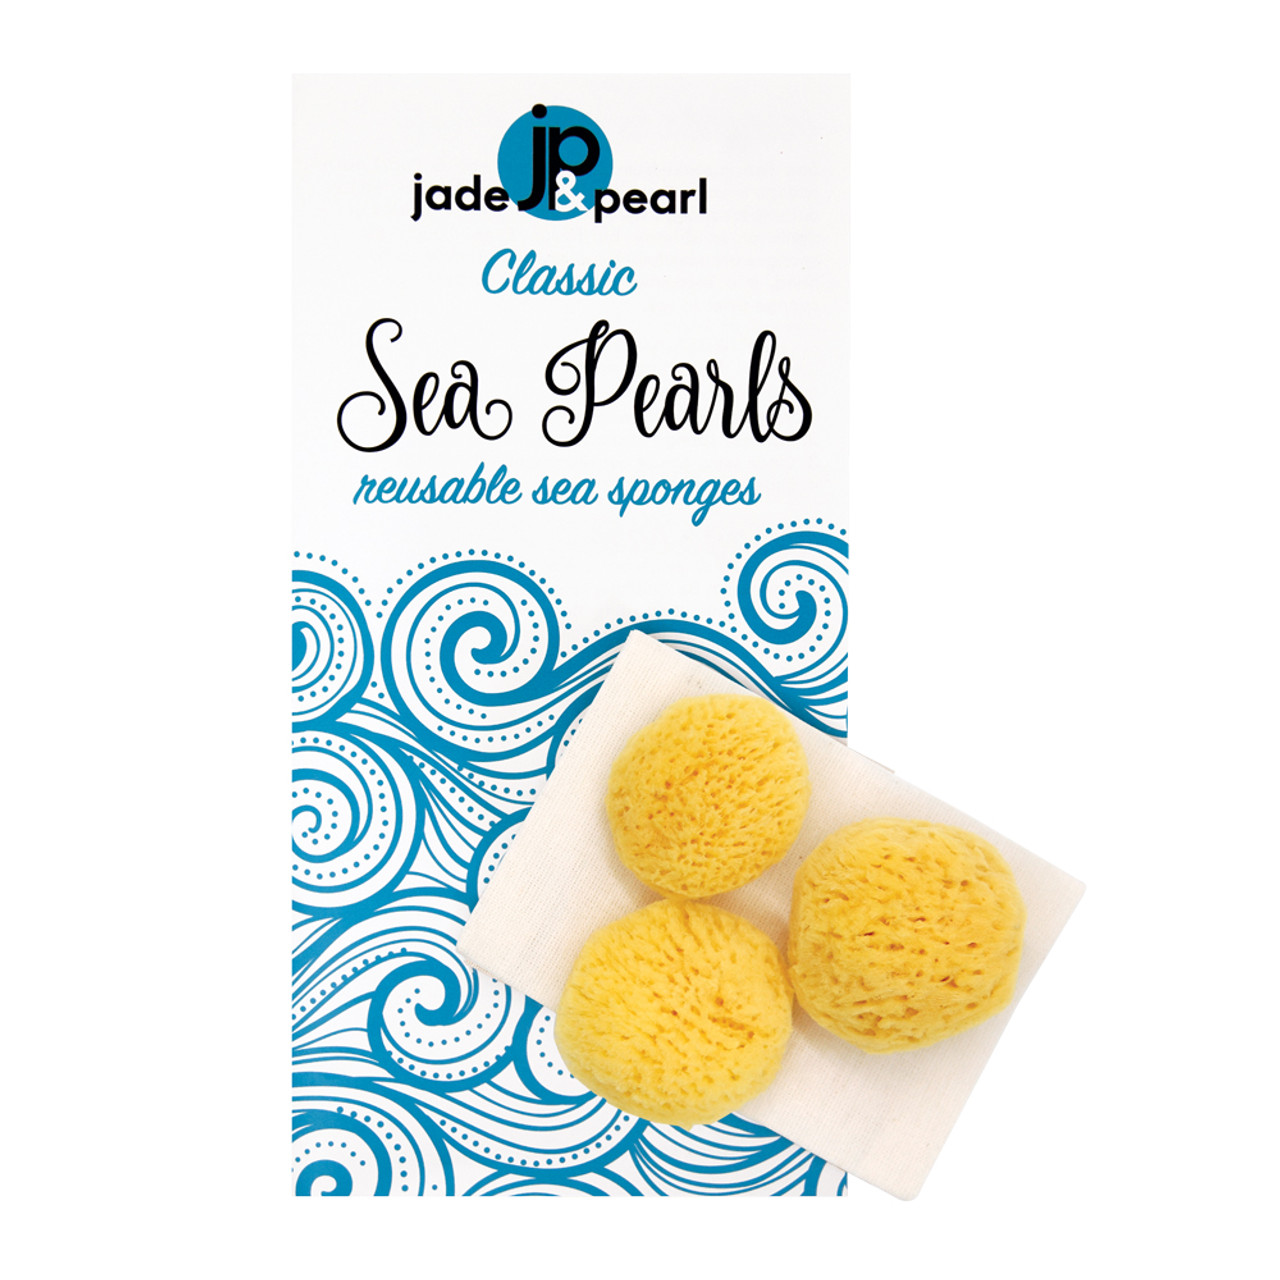 Sea Pearls Reusable Sea Sponges - Jade and Pearl